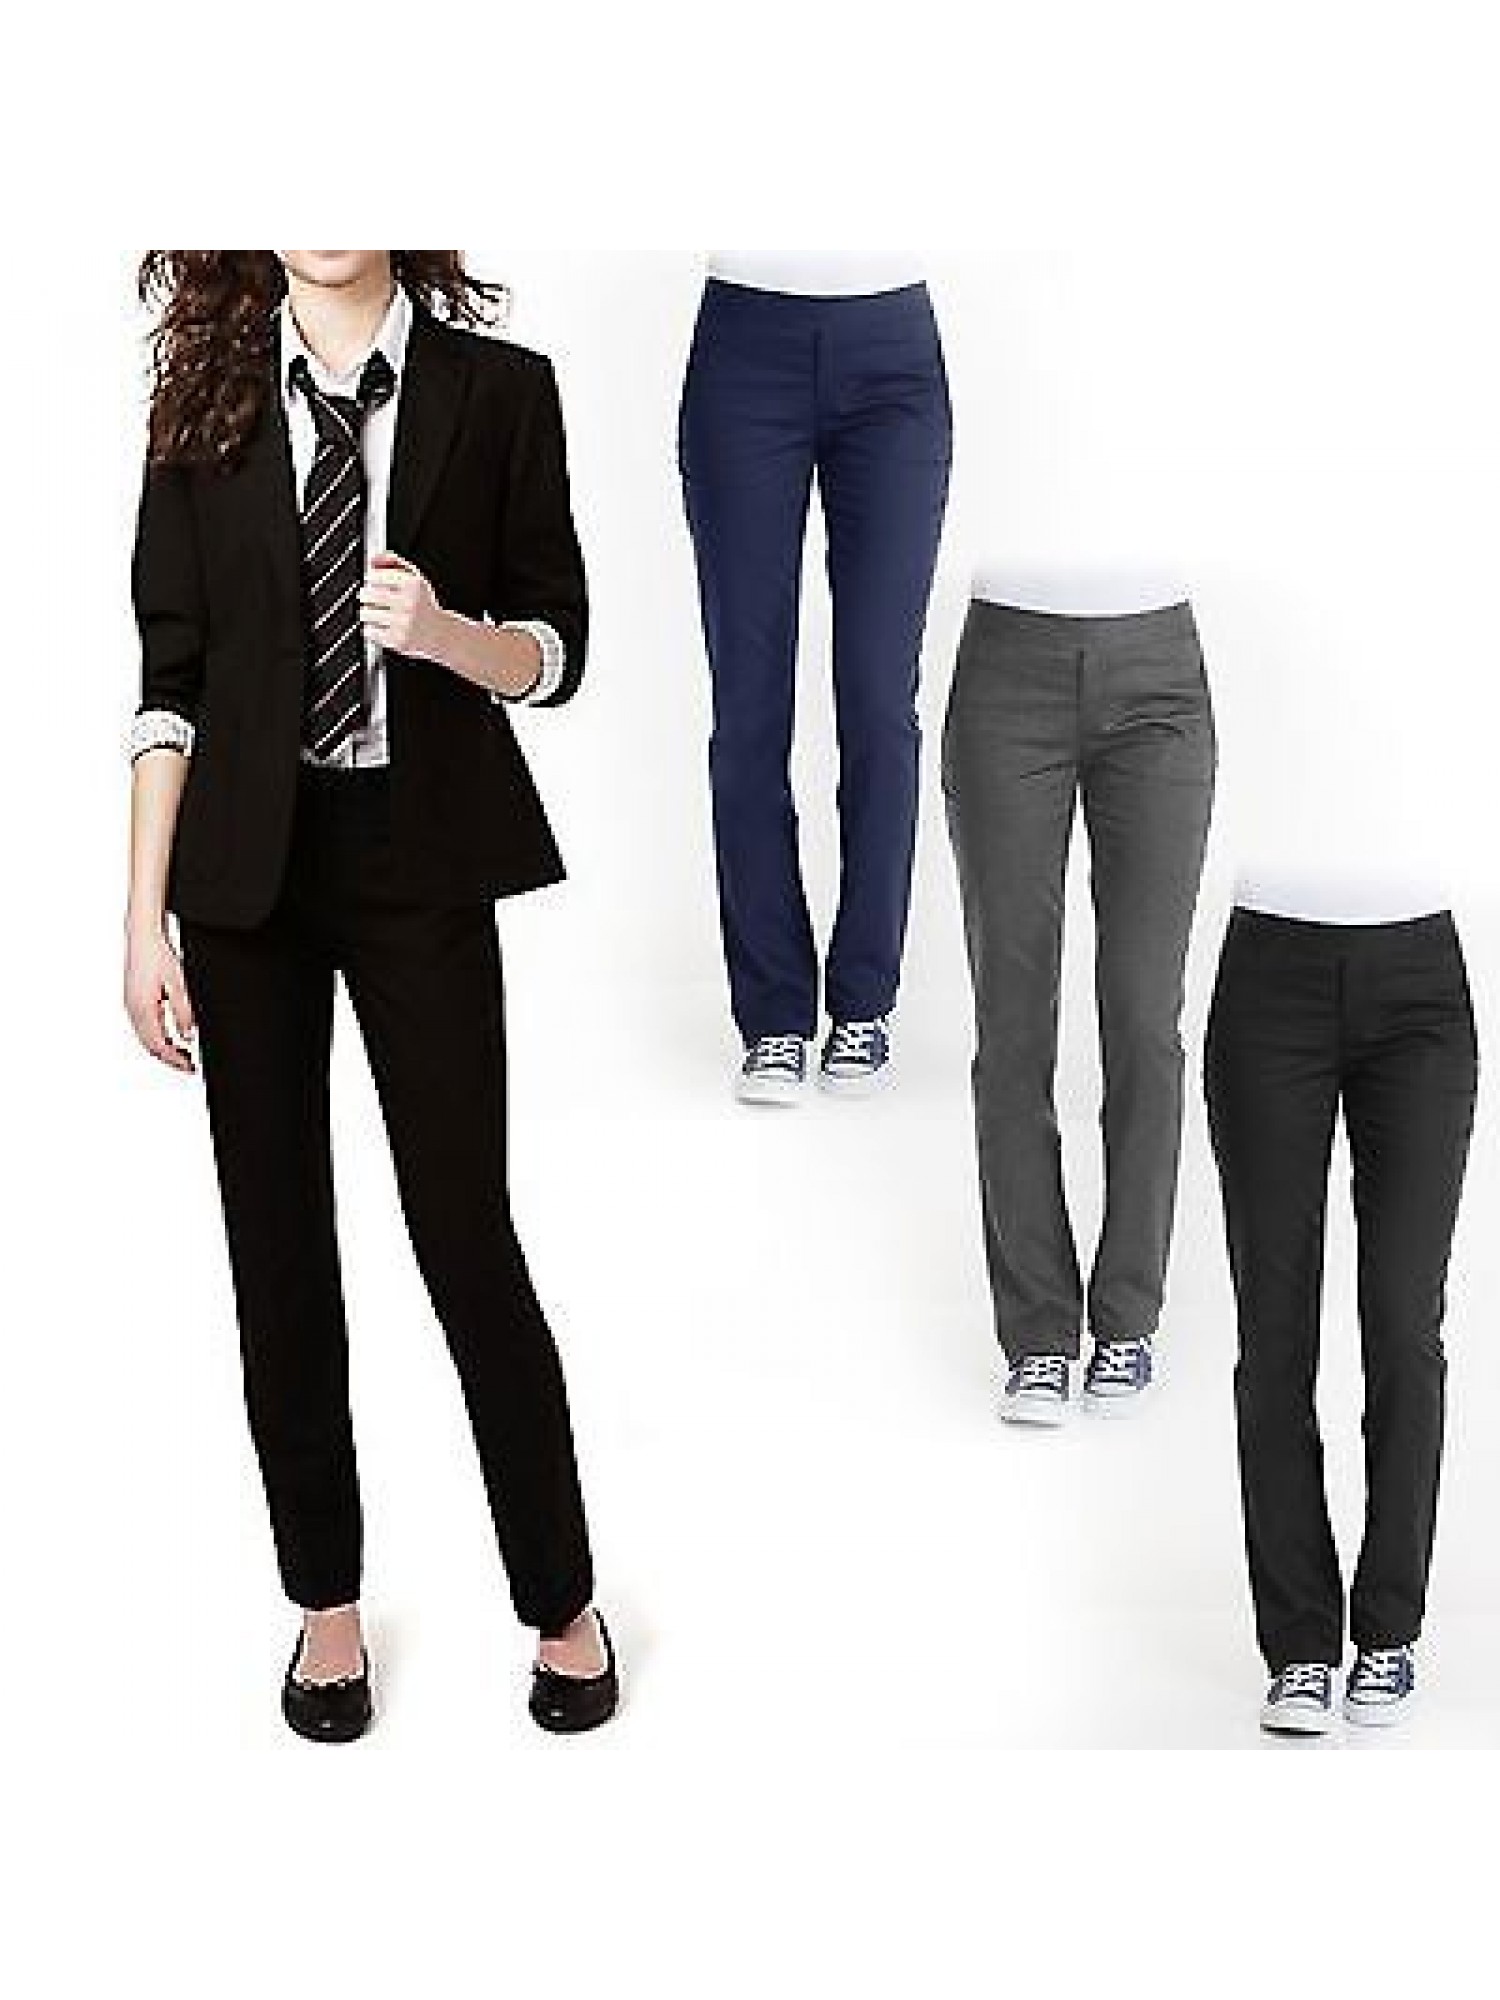 Akiihool Girls Uniform Pants Girls' School Uniform Skinny Leg Jogger Pants  (Black,4-5 Years) - Walmart.com